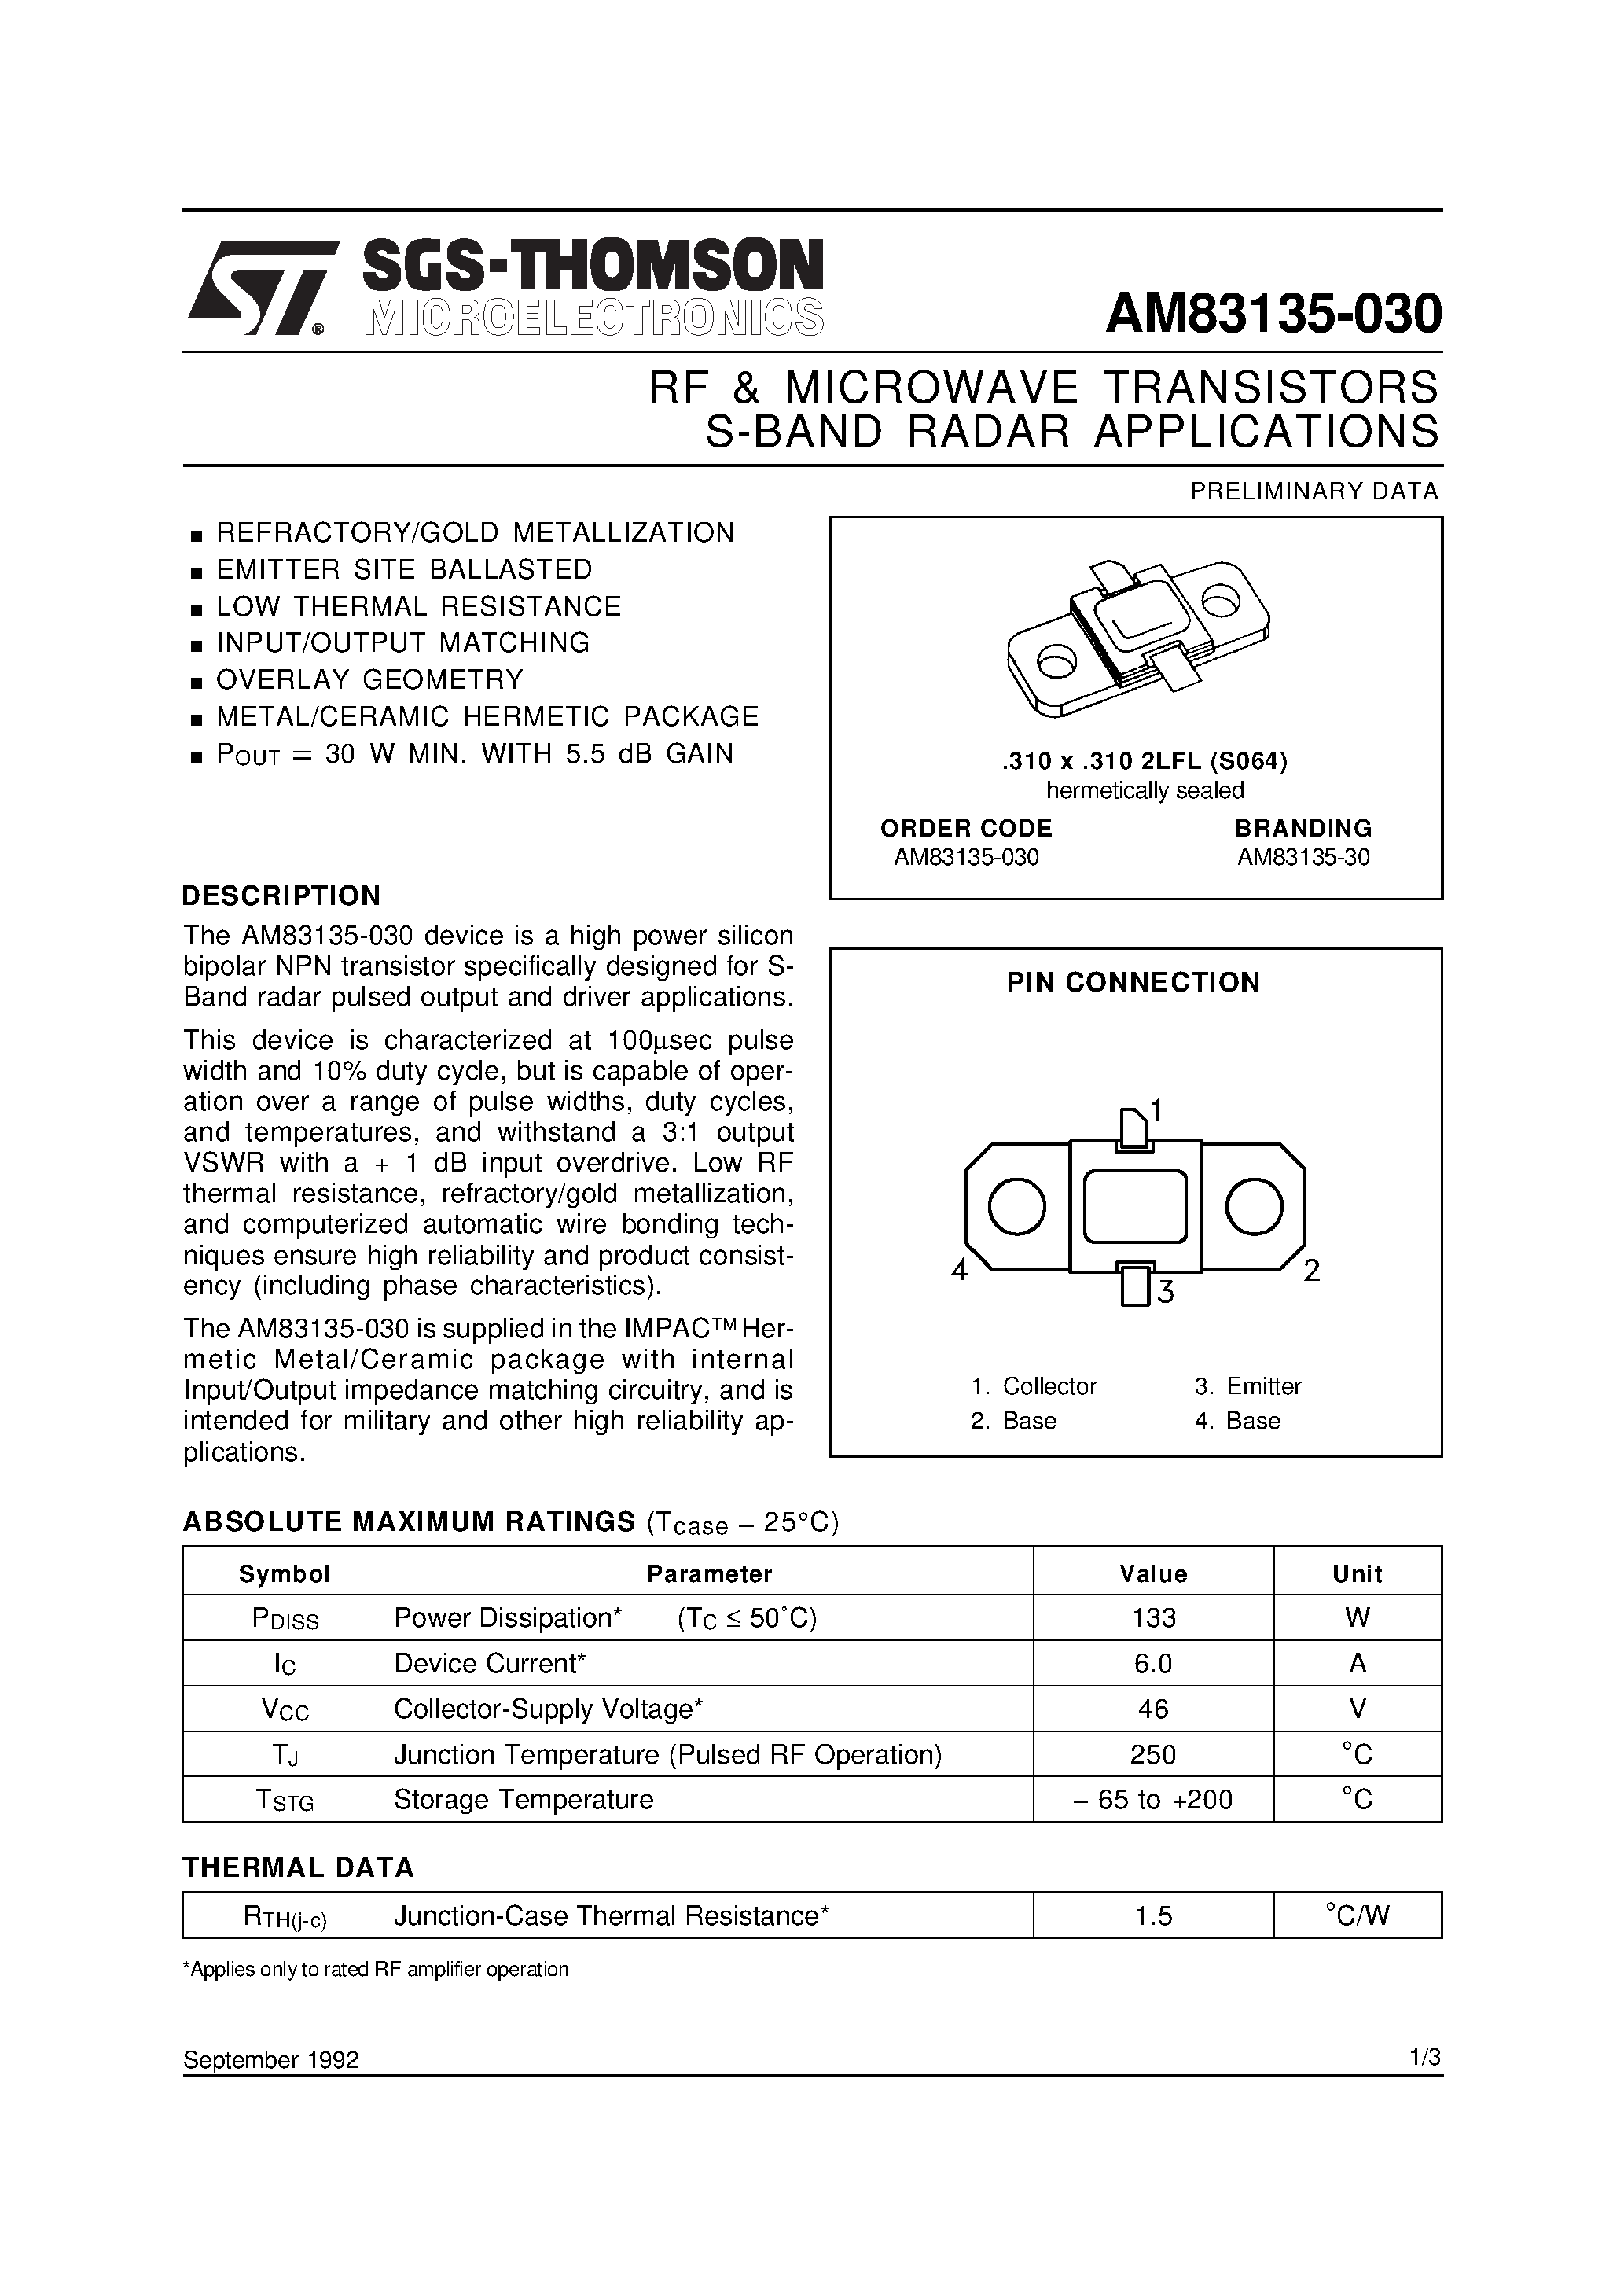 Datasheet AM83135-030 - RF & MICROWAVE TRANSISTORS S-BAND RADAR APPLICATIONS page 1